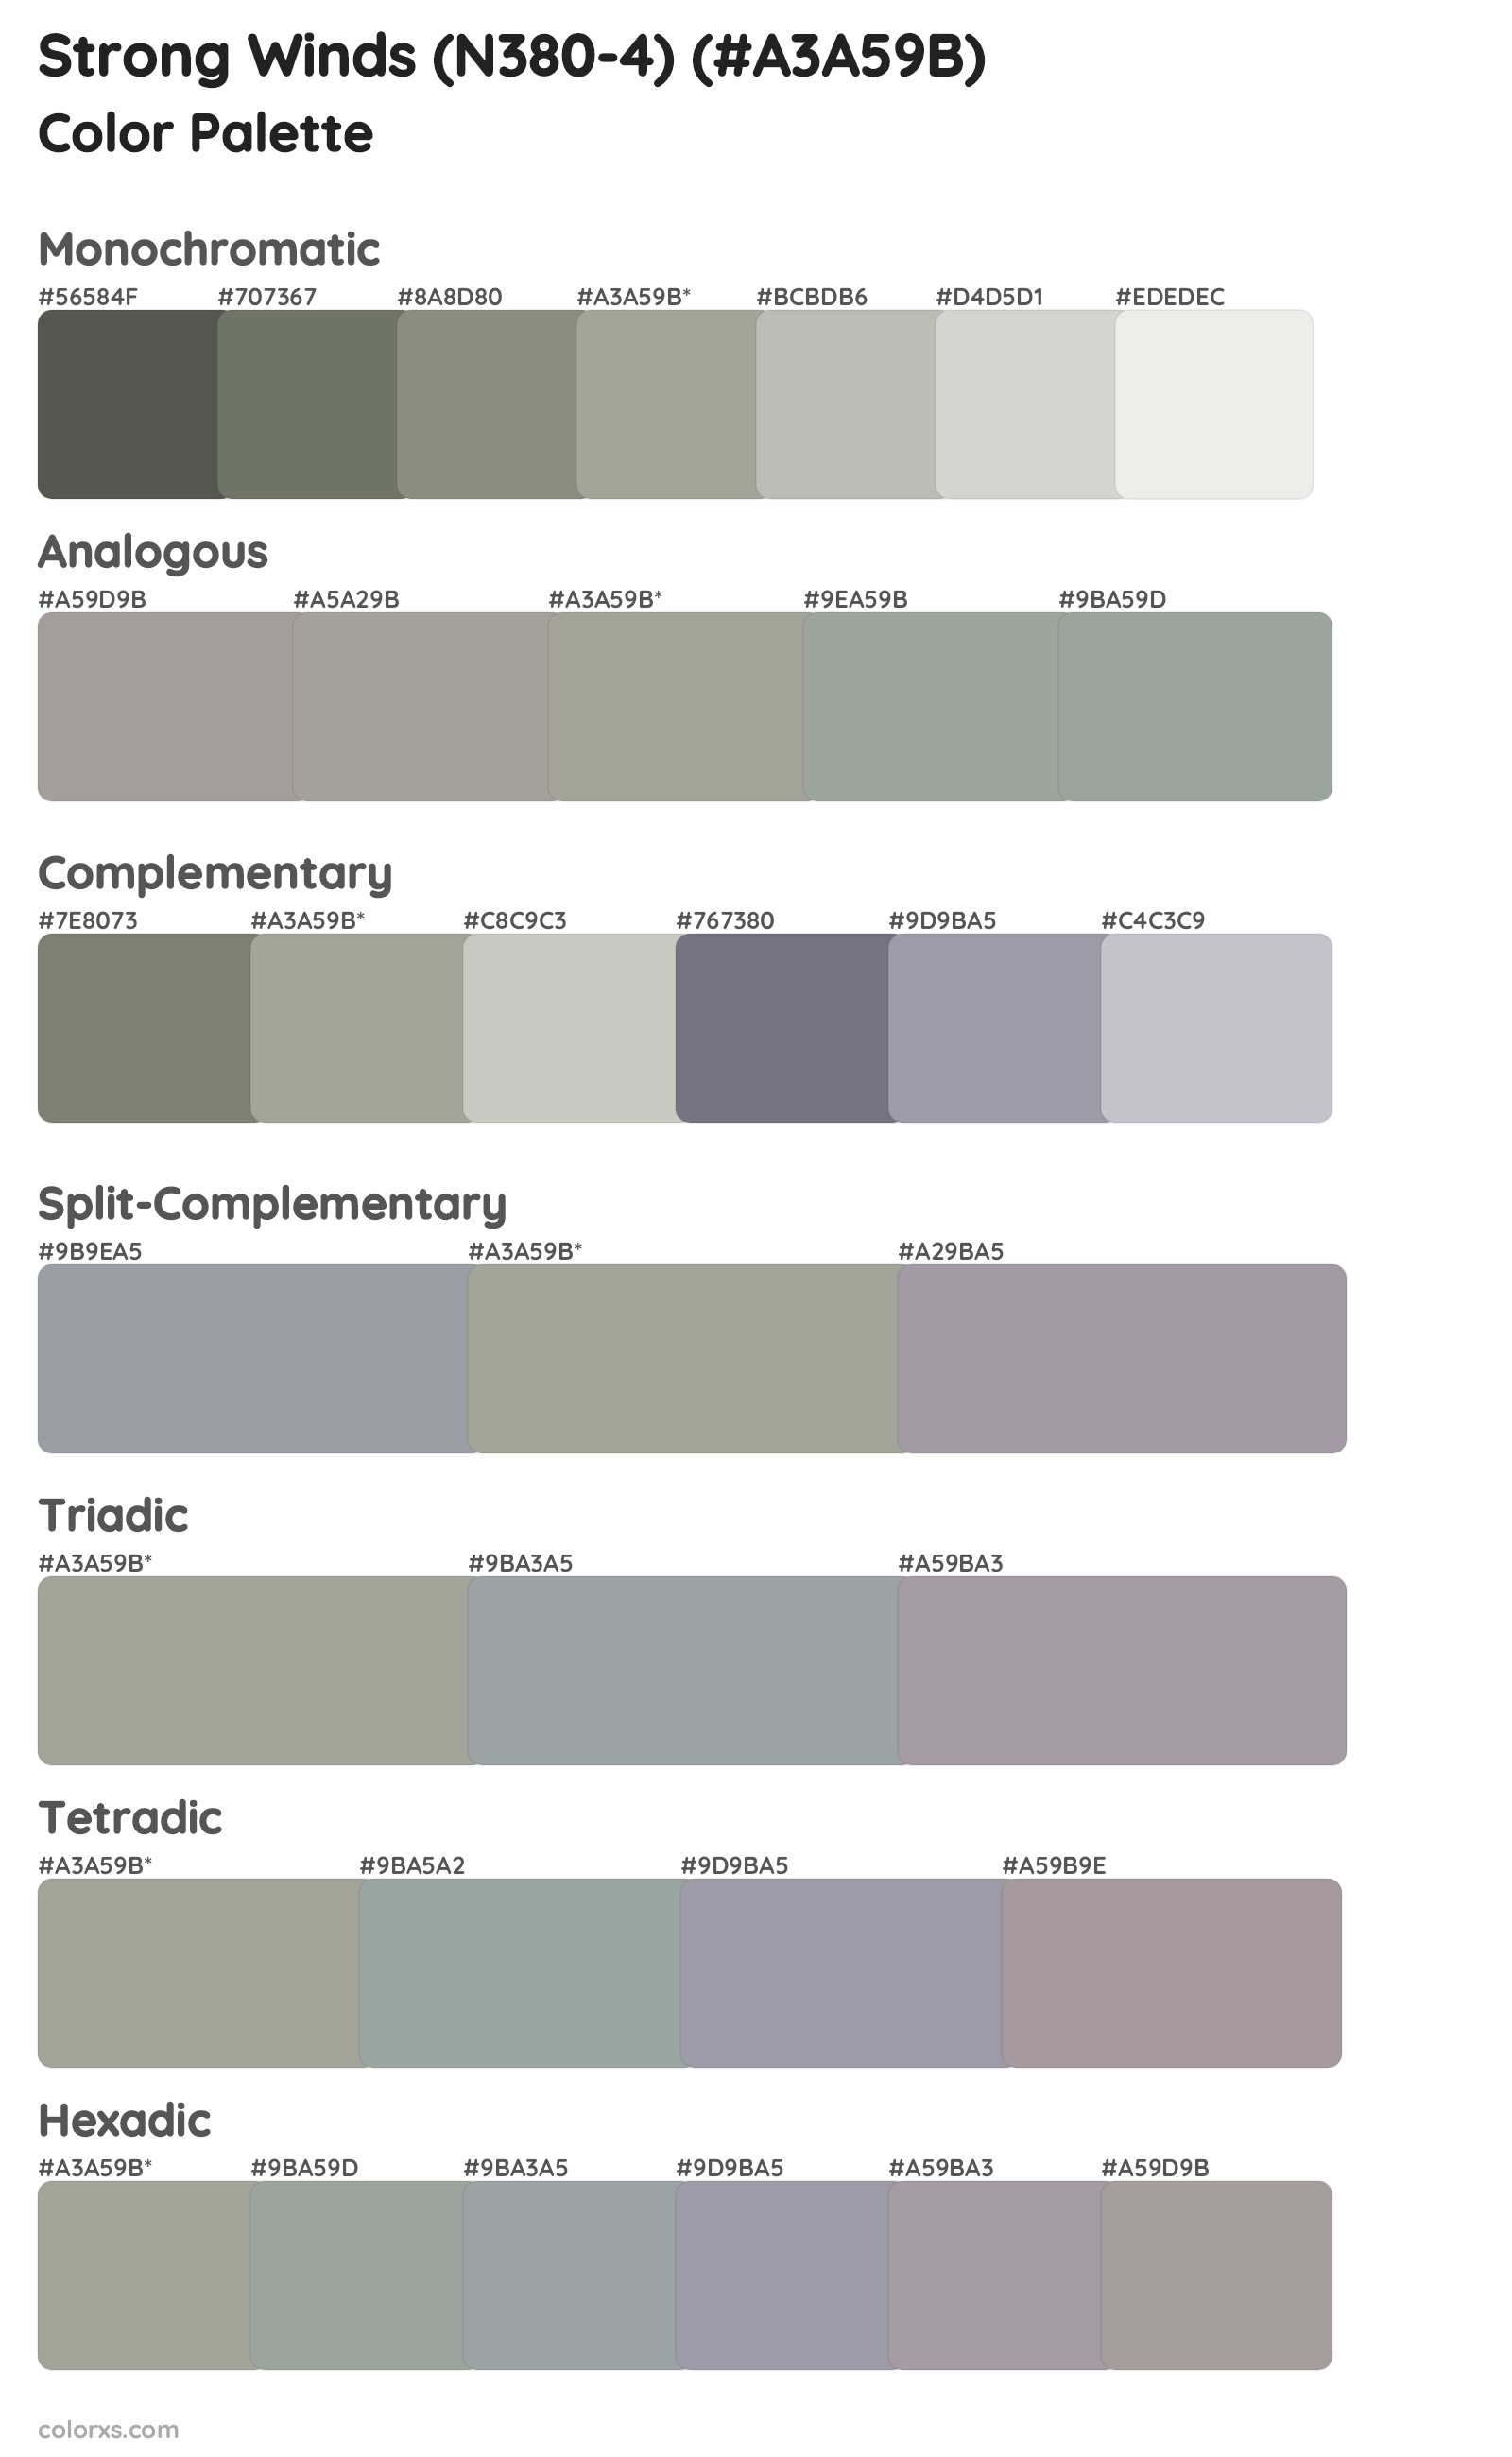 Strong Winds (N380-4) Color Scheme Palettes